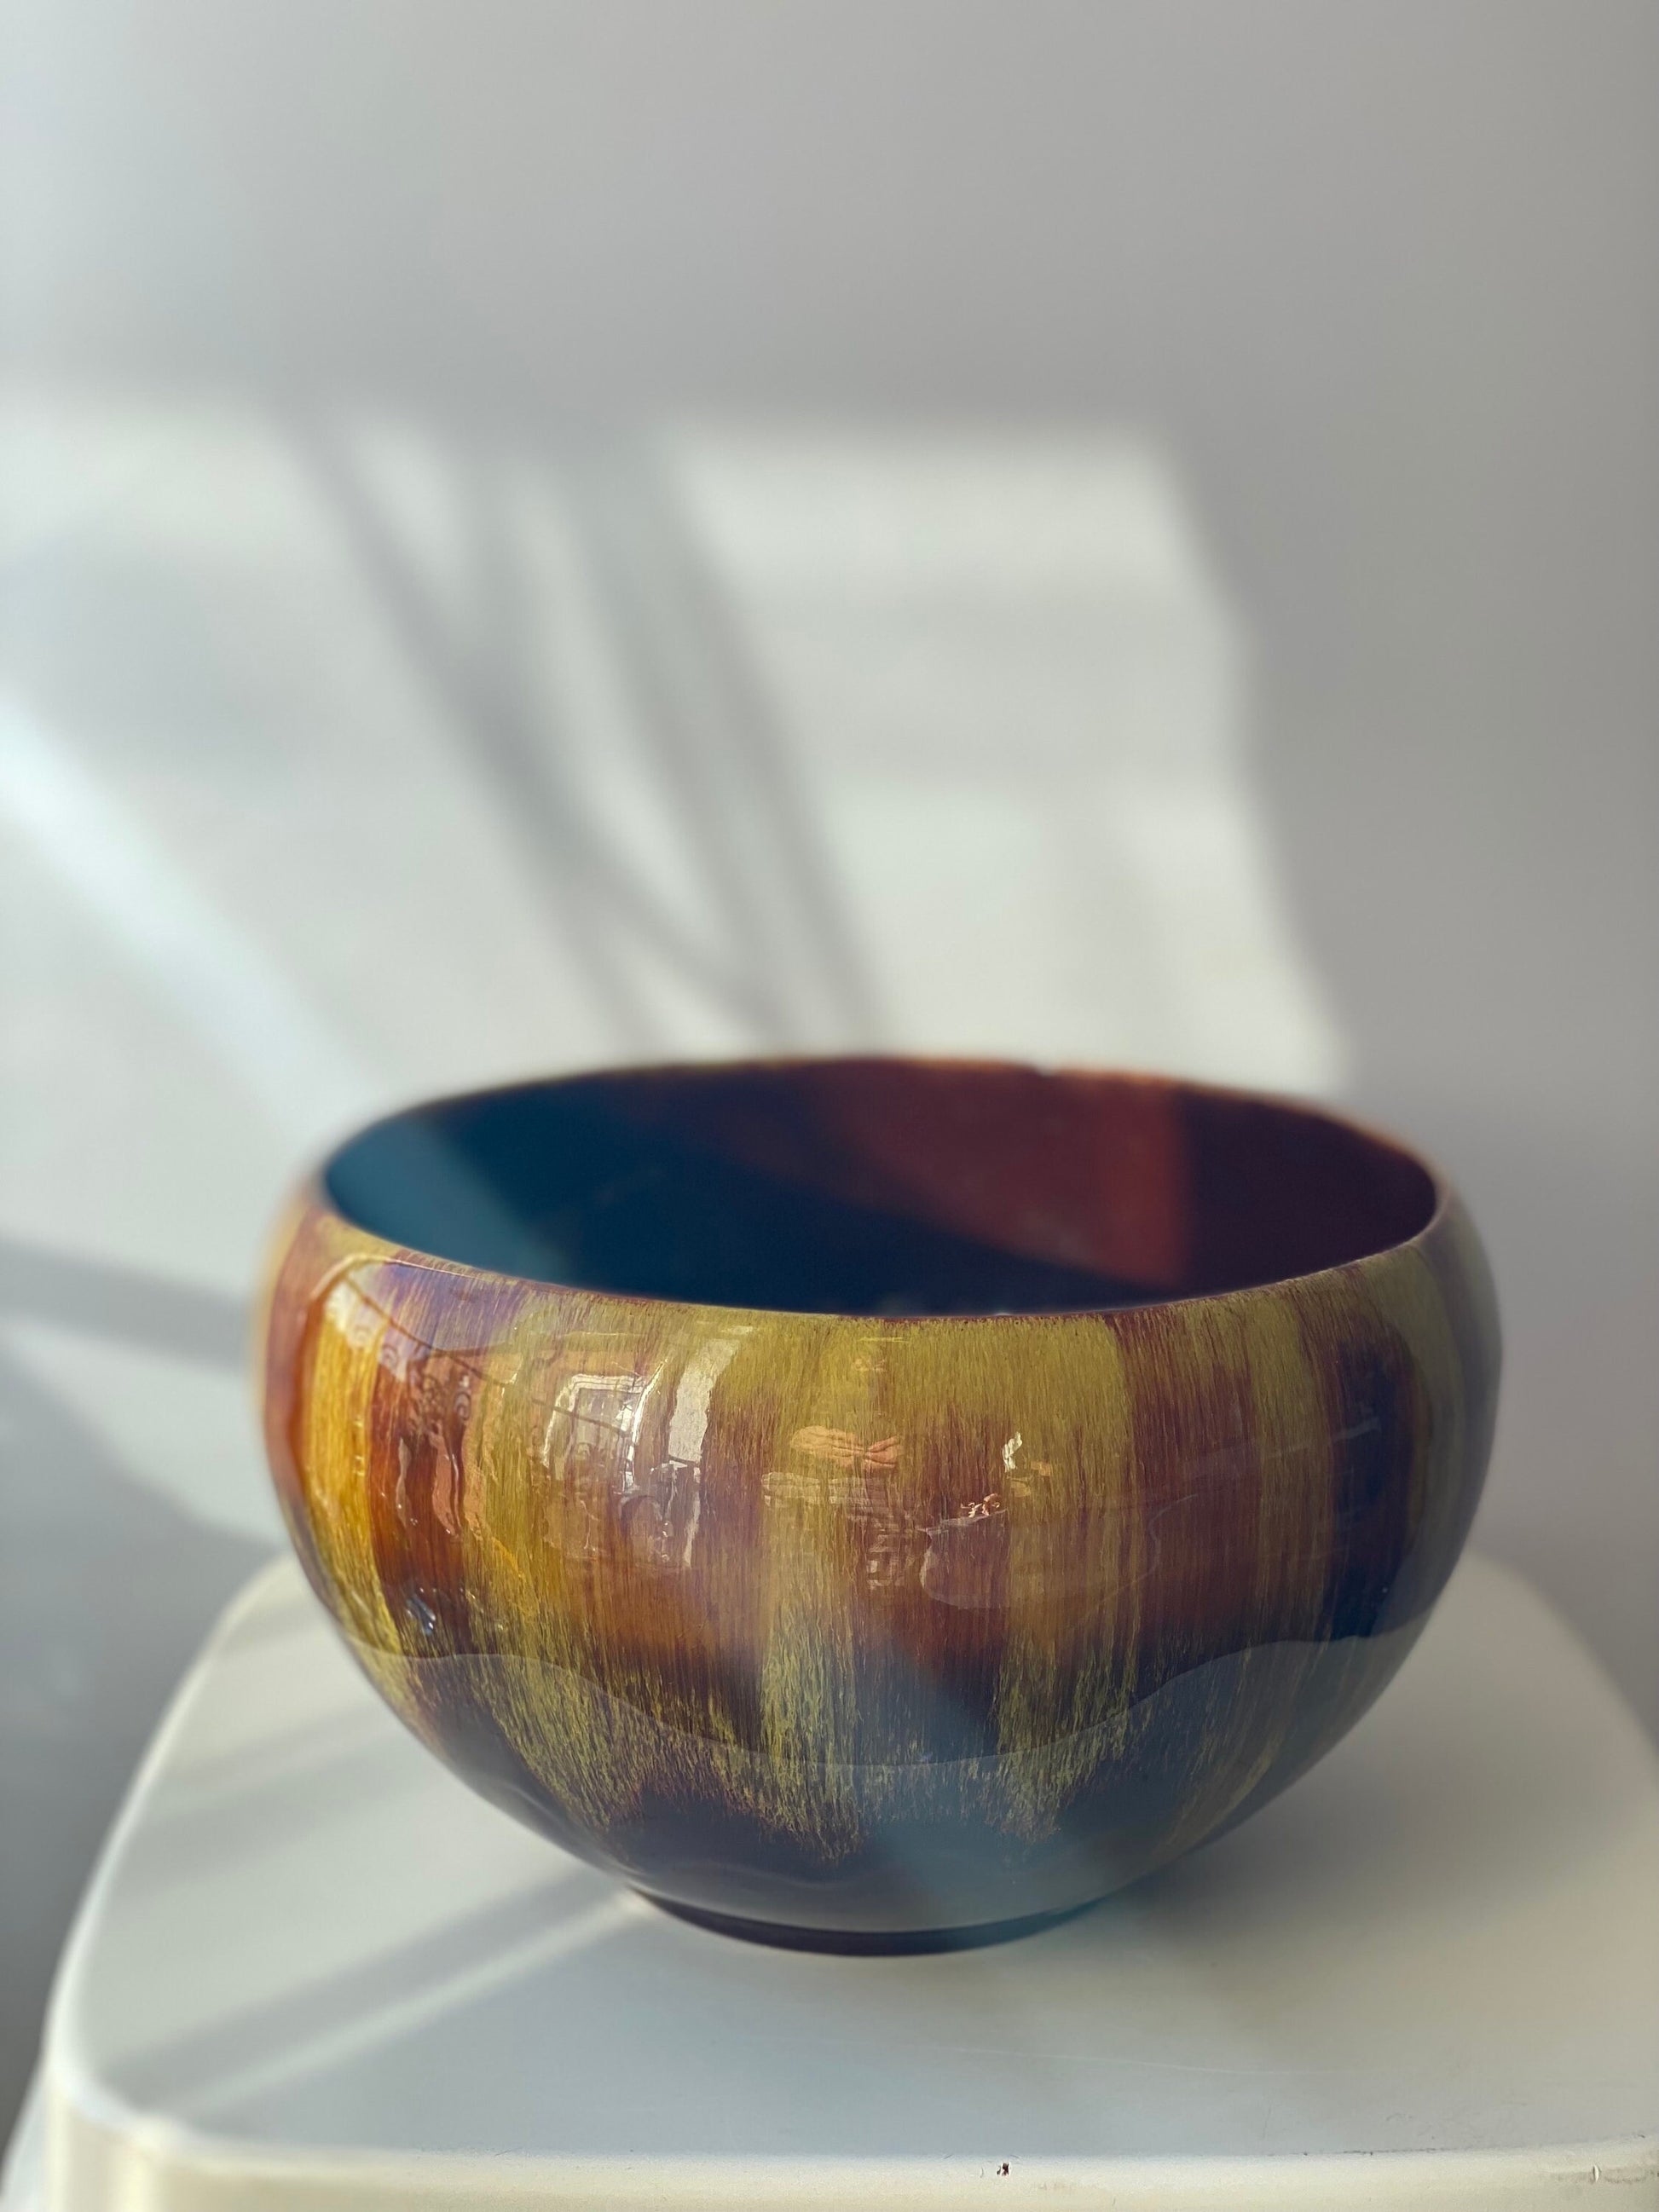 Canadian Blue Mountain Pottery Bowl Vase 1980s Harvest Yellow Gold Glaze